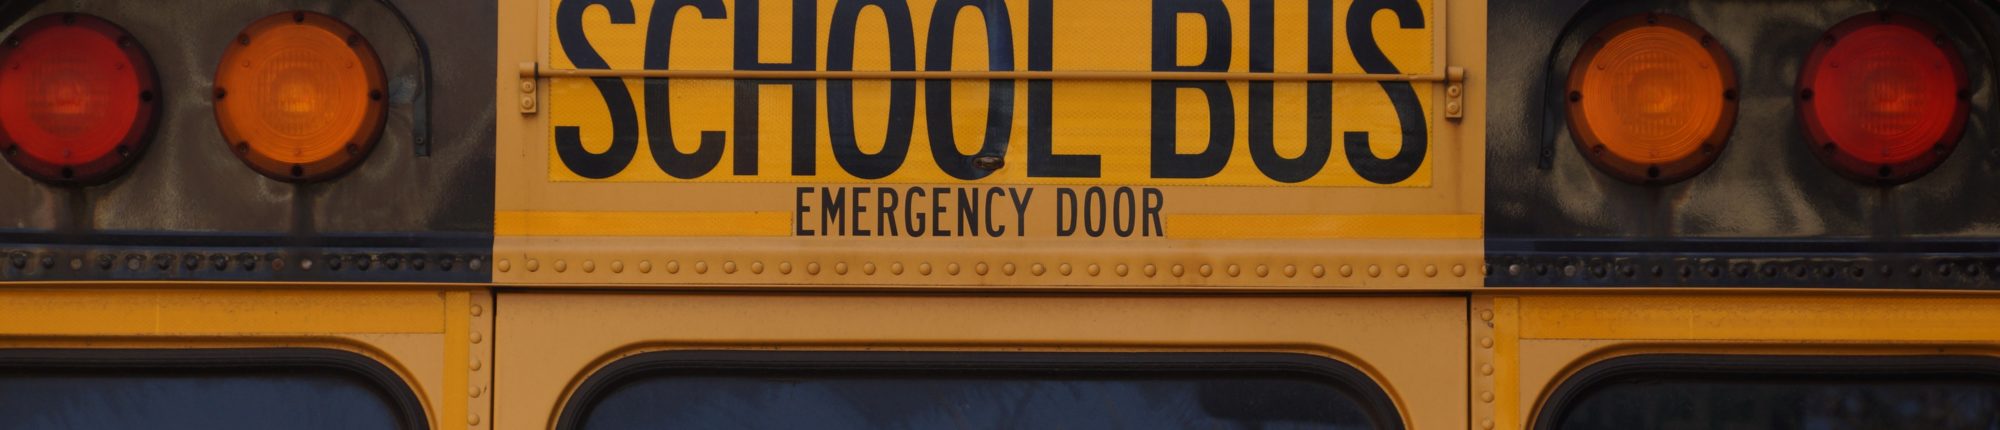 Close view: back of a yellow school bus with "school bus emergency door" at the top of the door